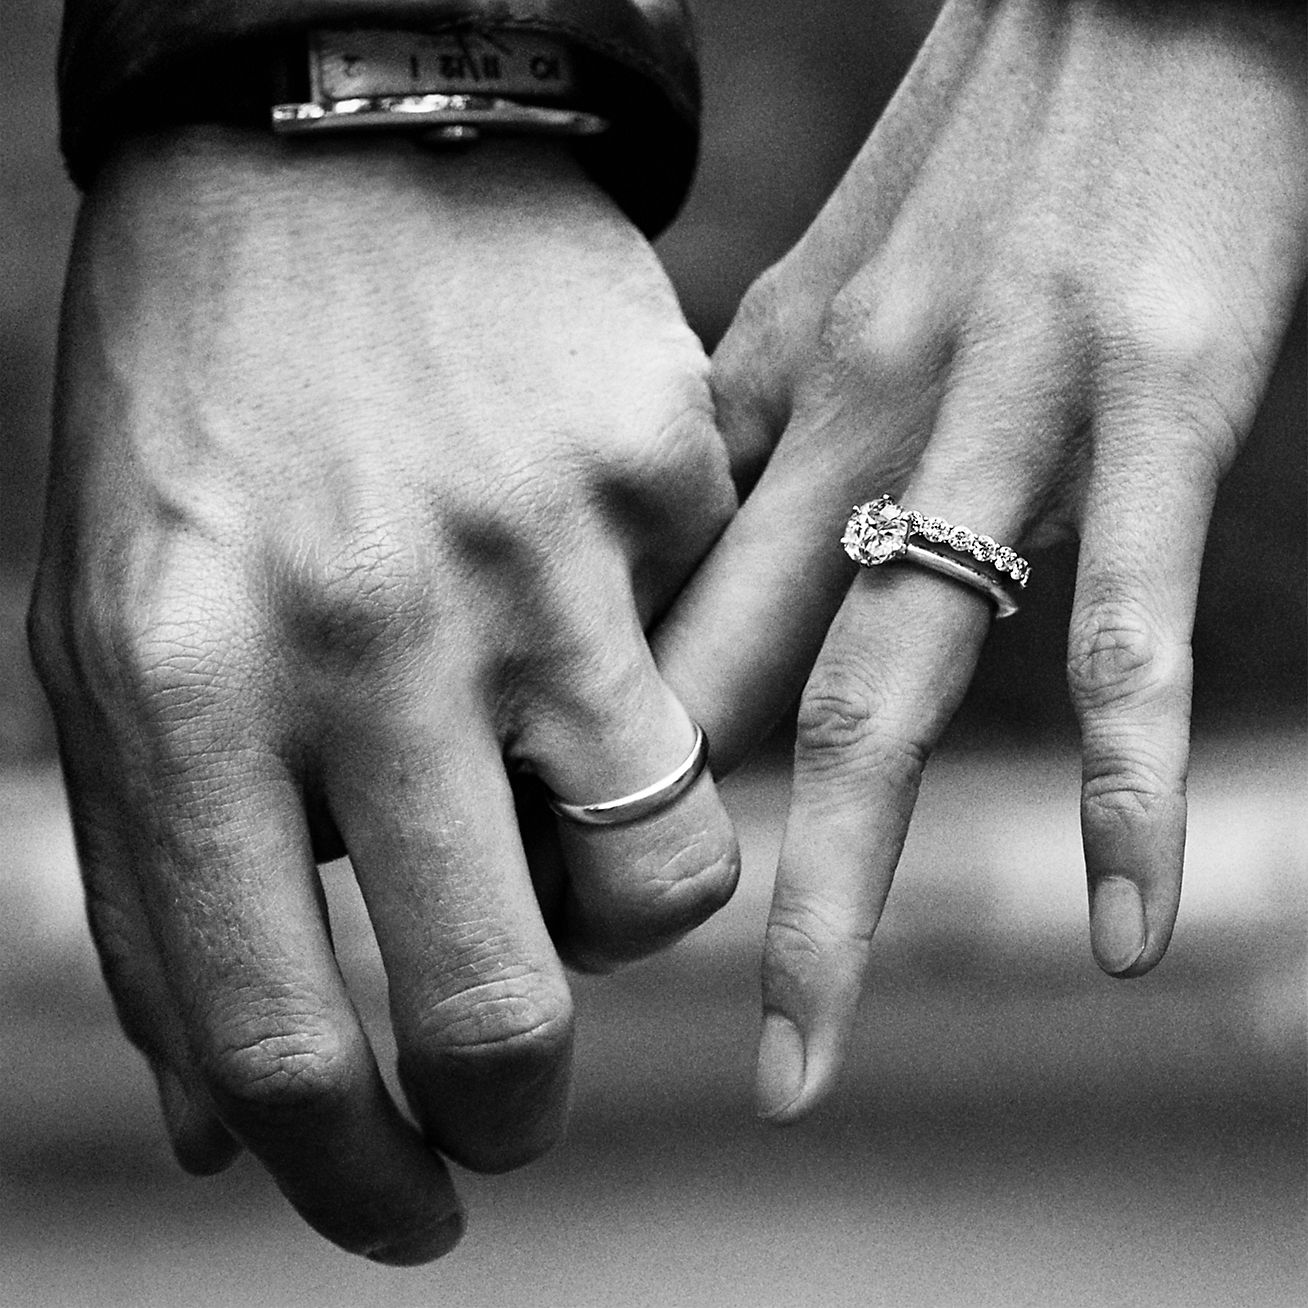 tiffany engagement ring with wedding band